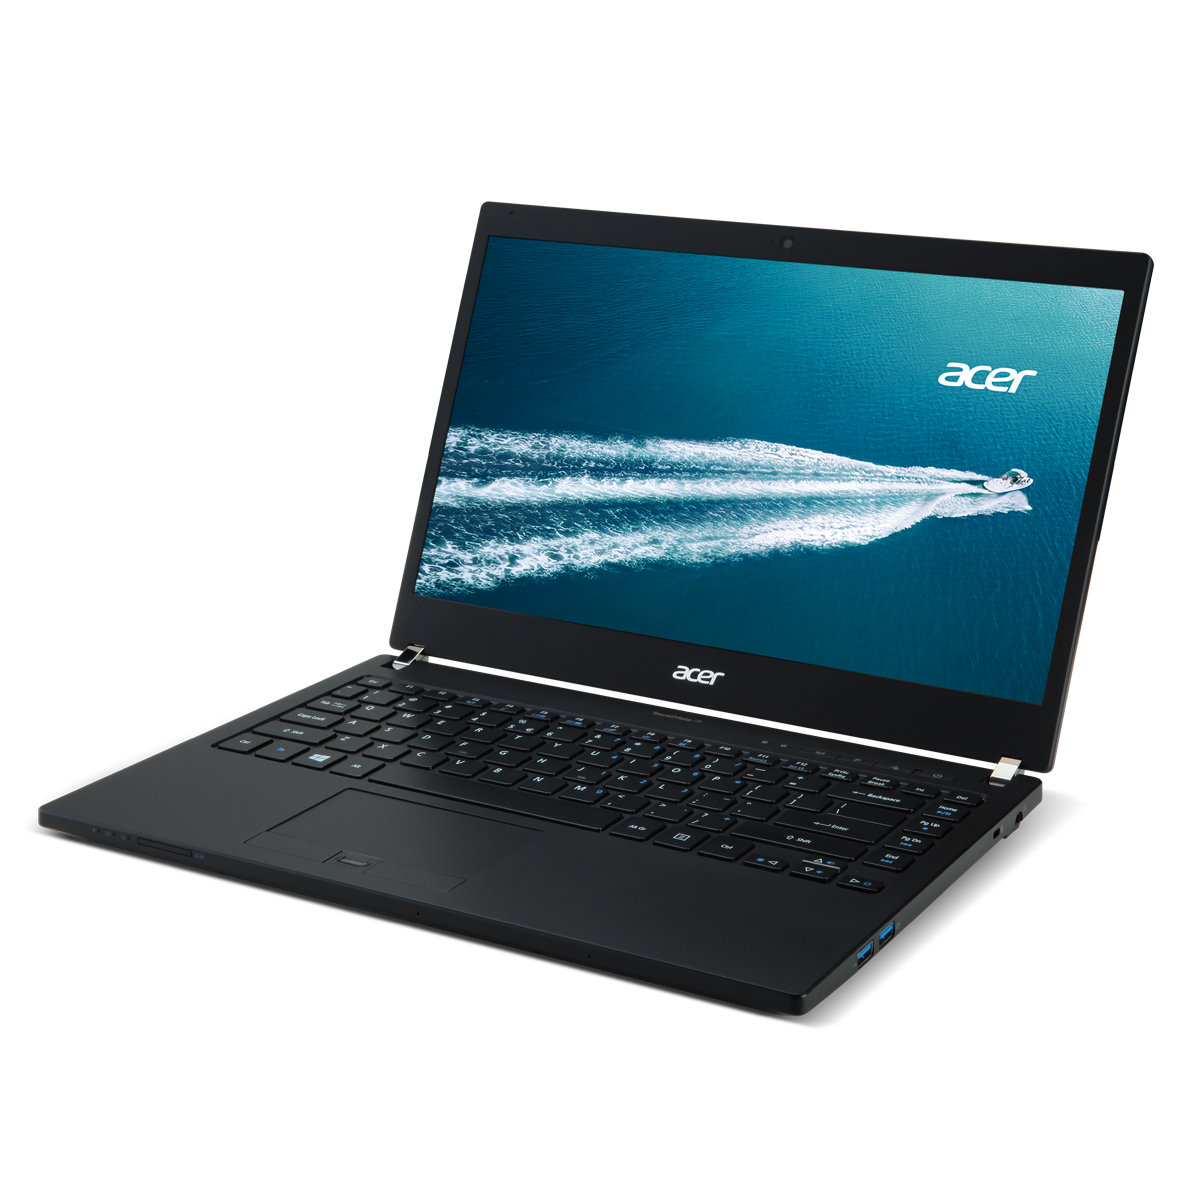 Acer TravelMate Laptop Repairs ANU